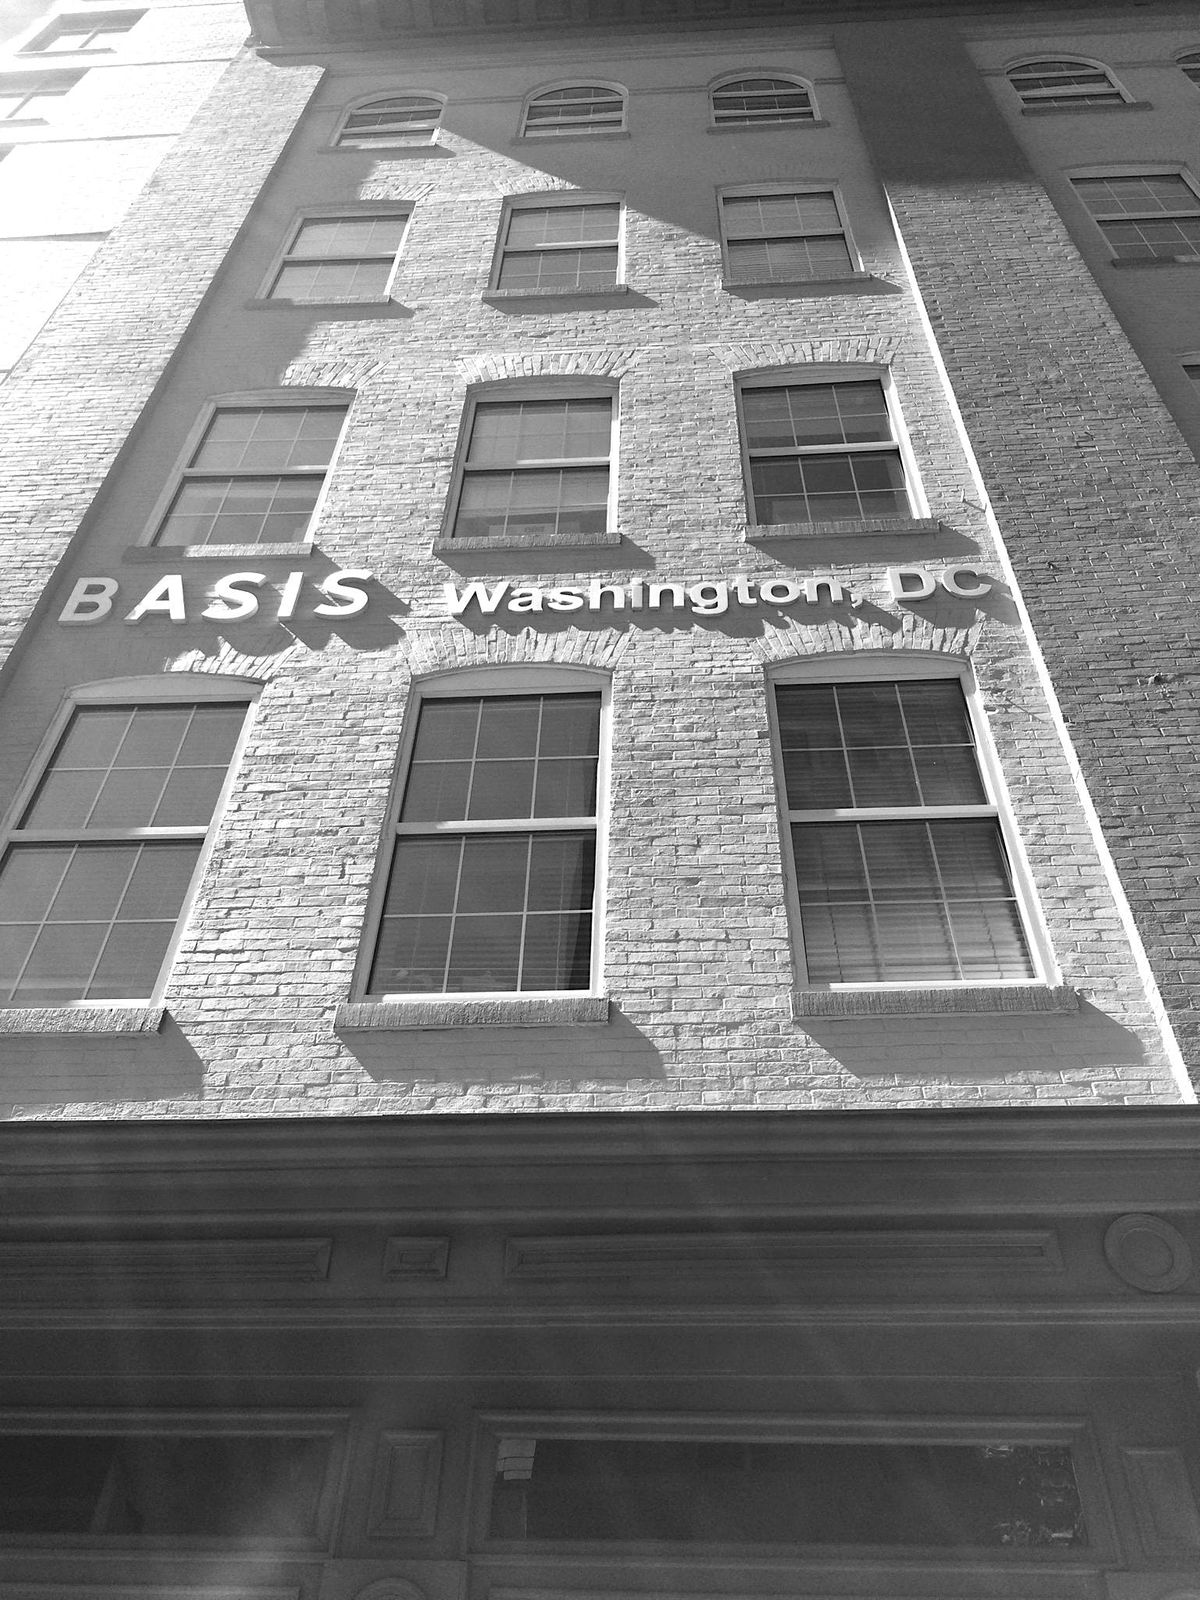 Tour BASIS Washington DC